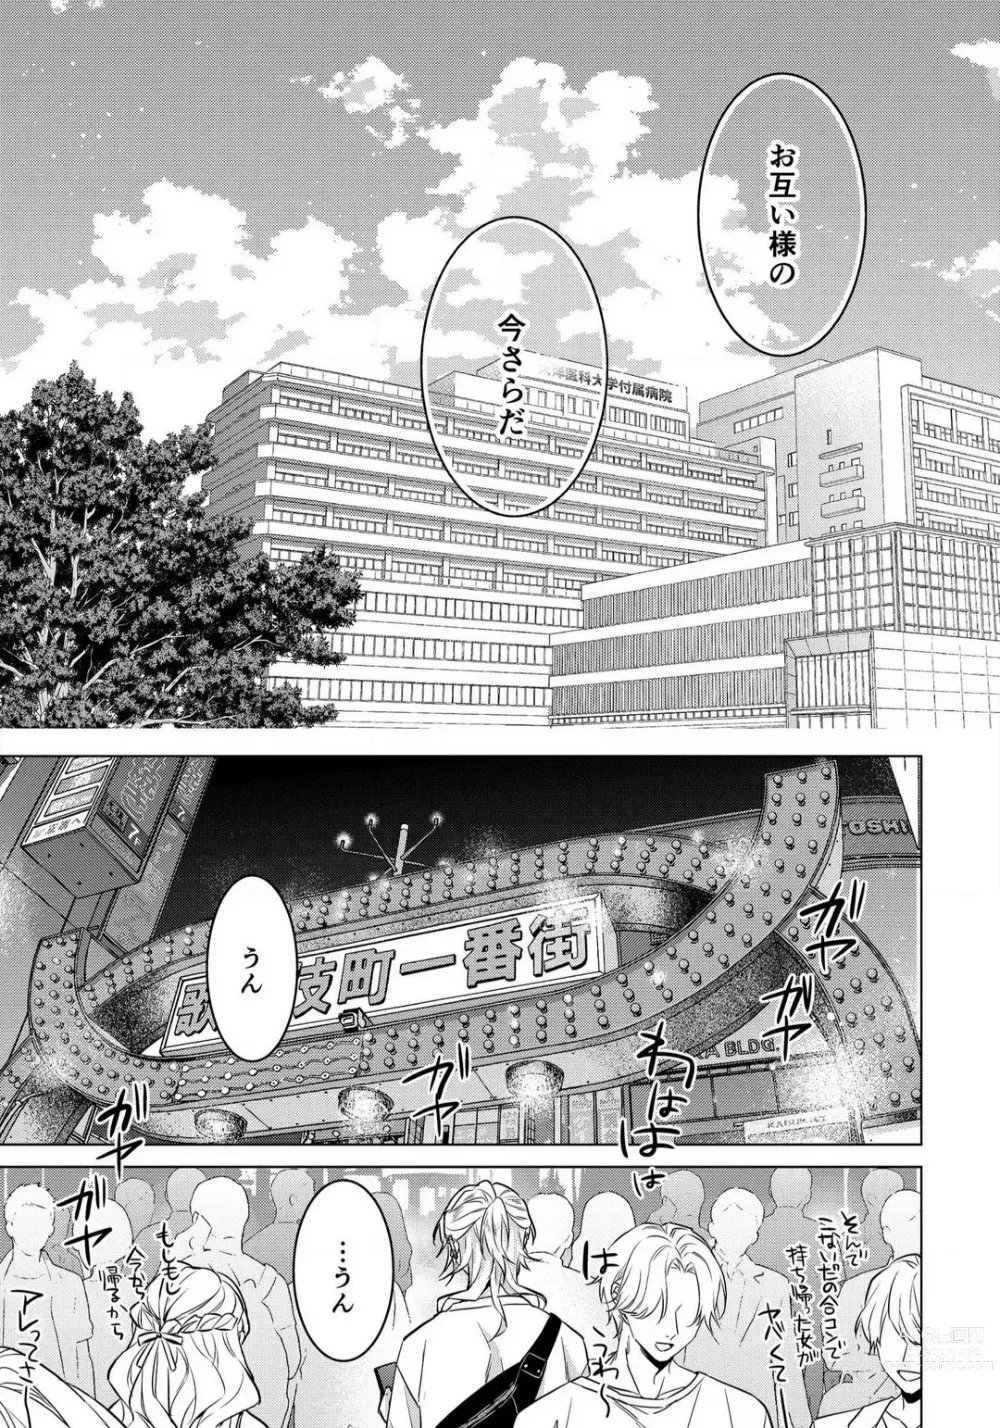 Page 832 of manga Ijimerare - Onna